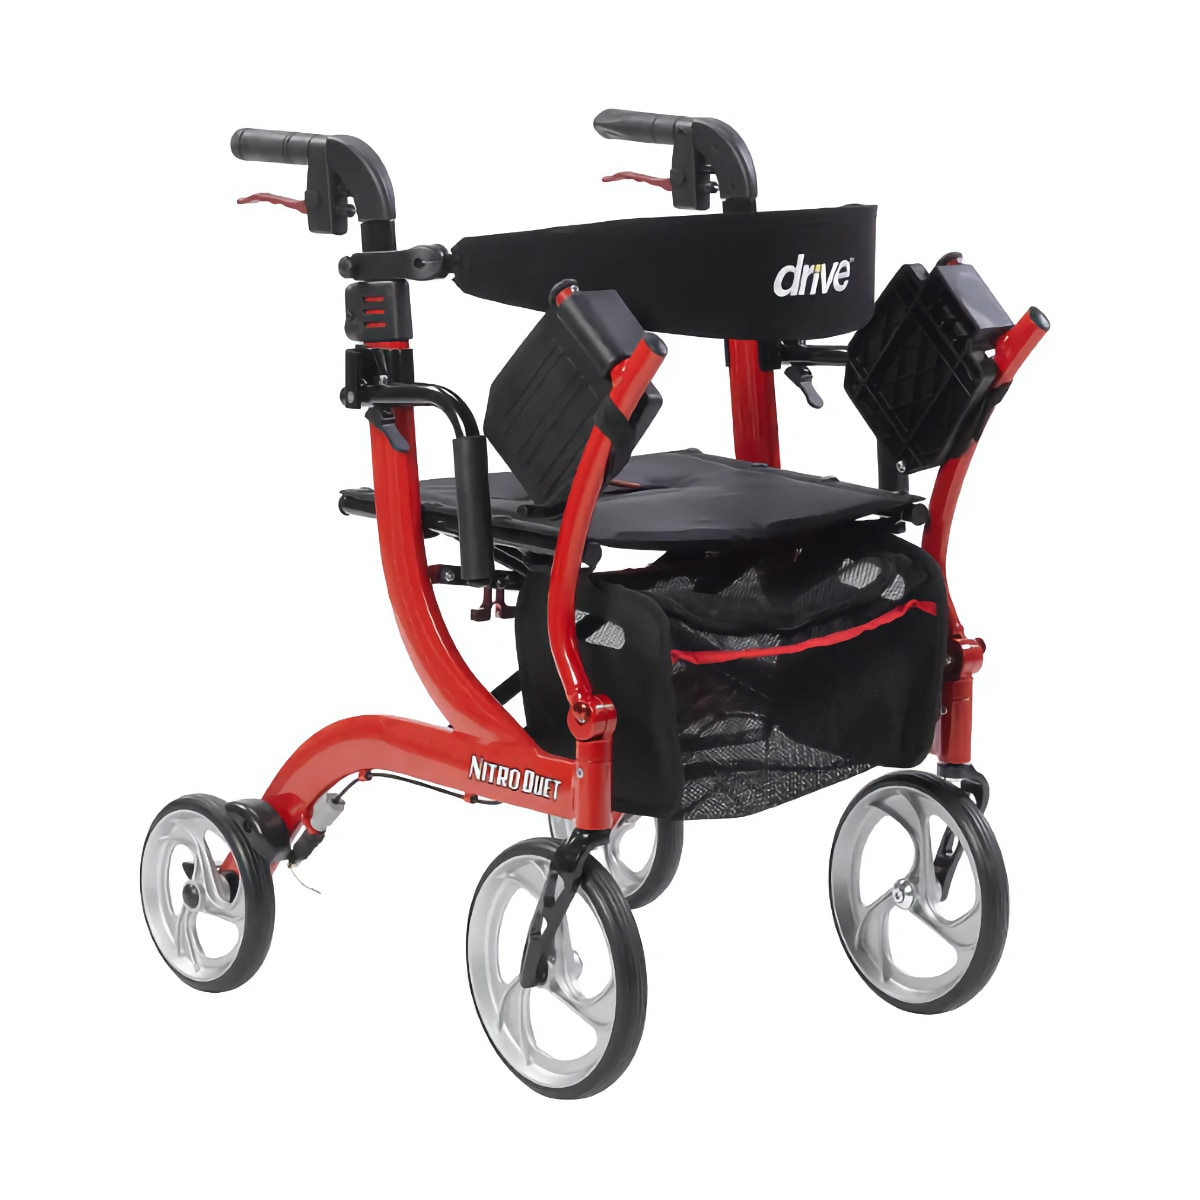 Drive Nitro Duet rollator / transport chair in rollator/walker position